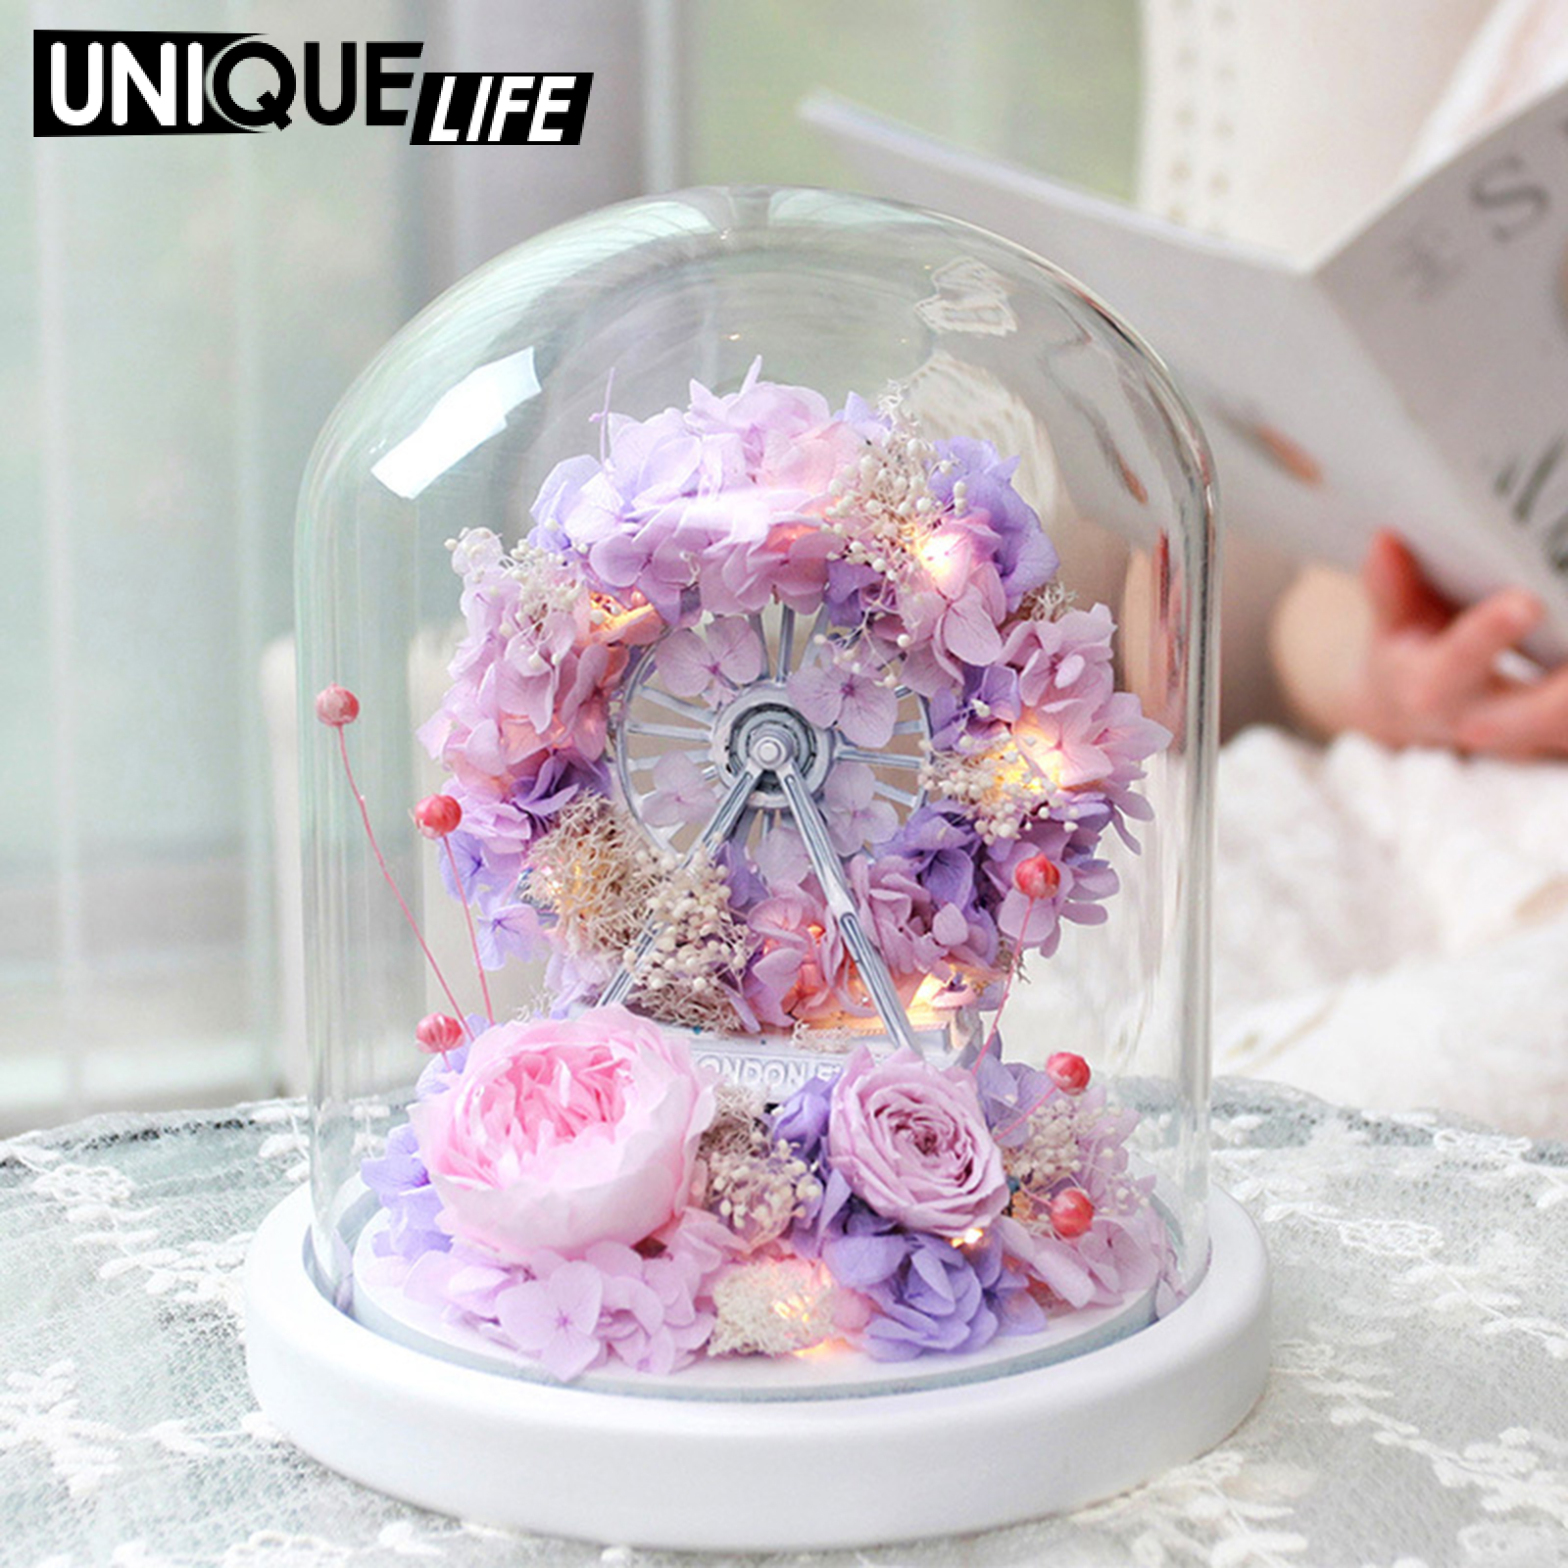 [Unique Life]Handmade Eternal Flower Box Led Ferris Wheel w/ Glass Dome Gift